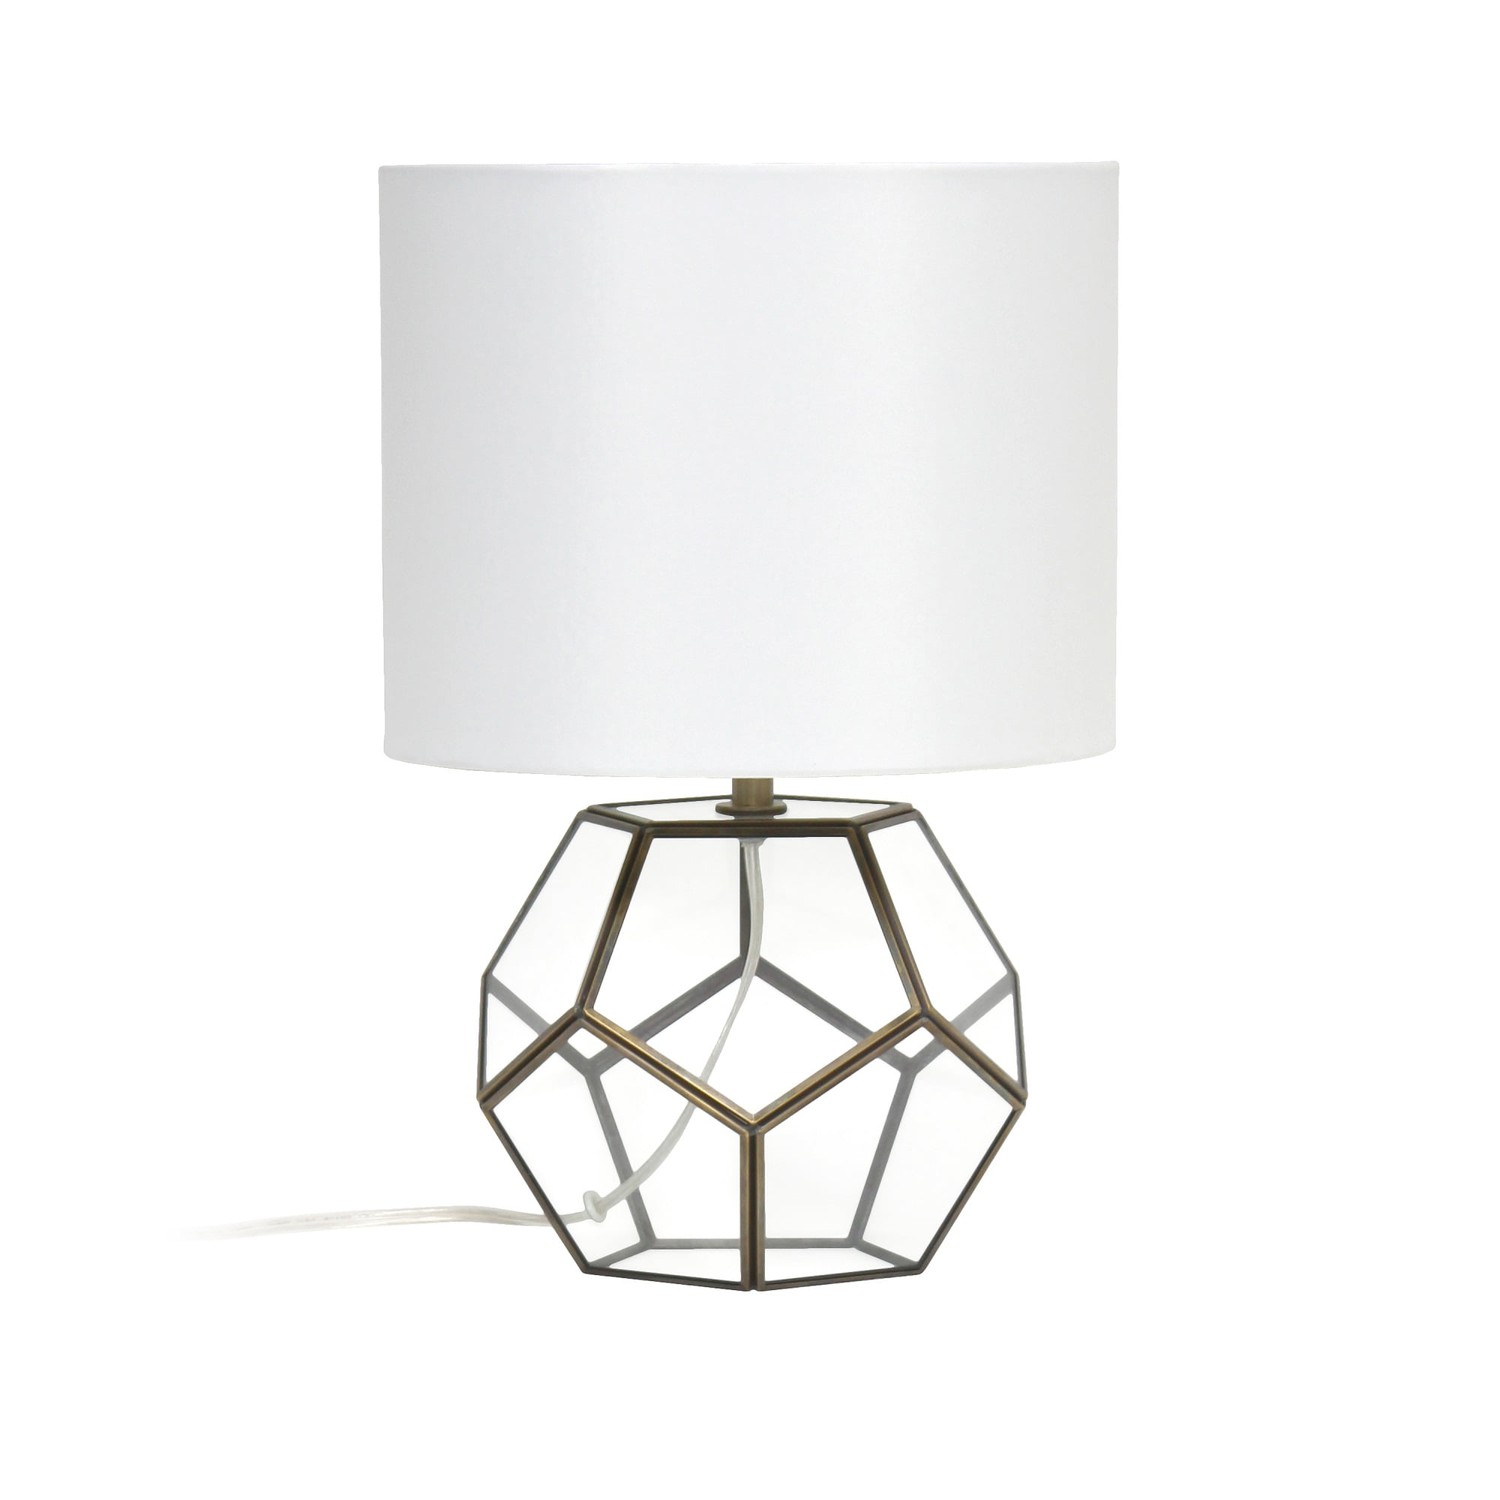 Lalia Home Transparent Octagonal Table Lamp, Brass